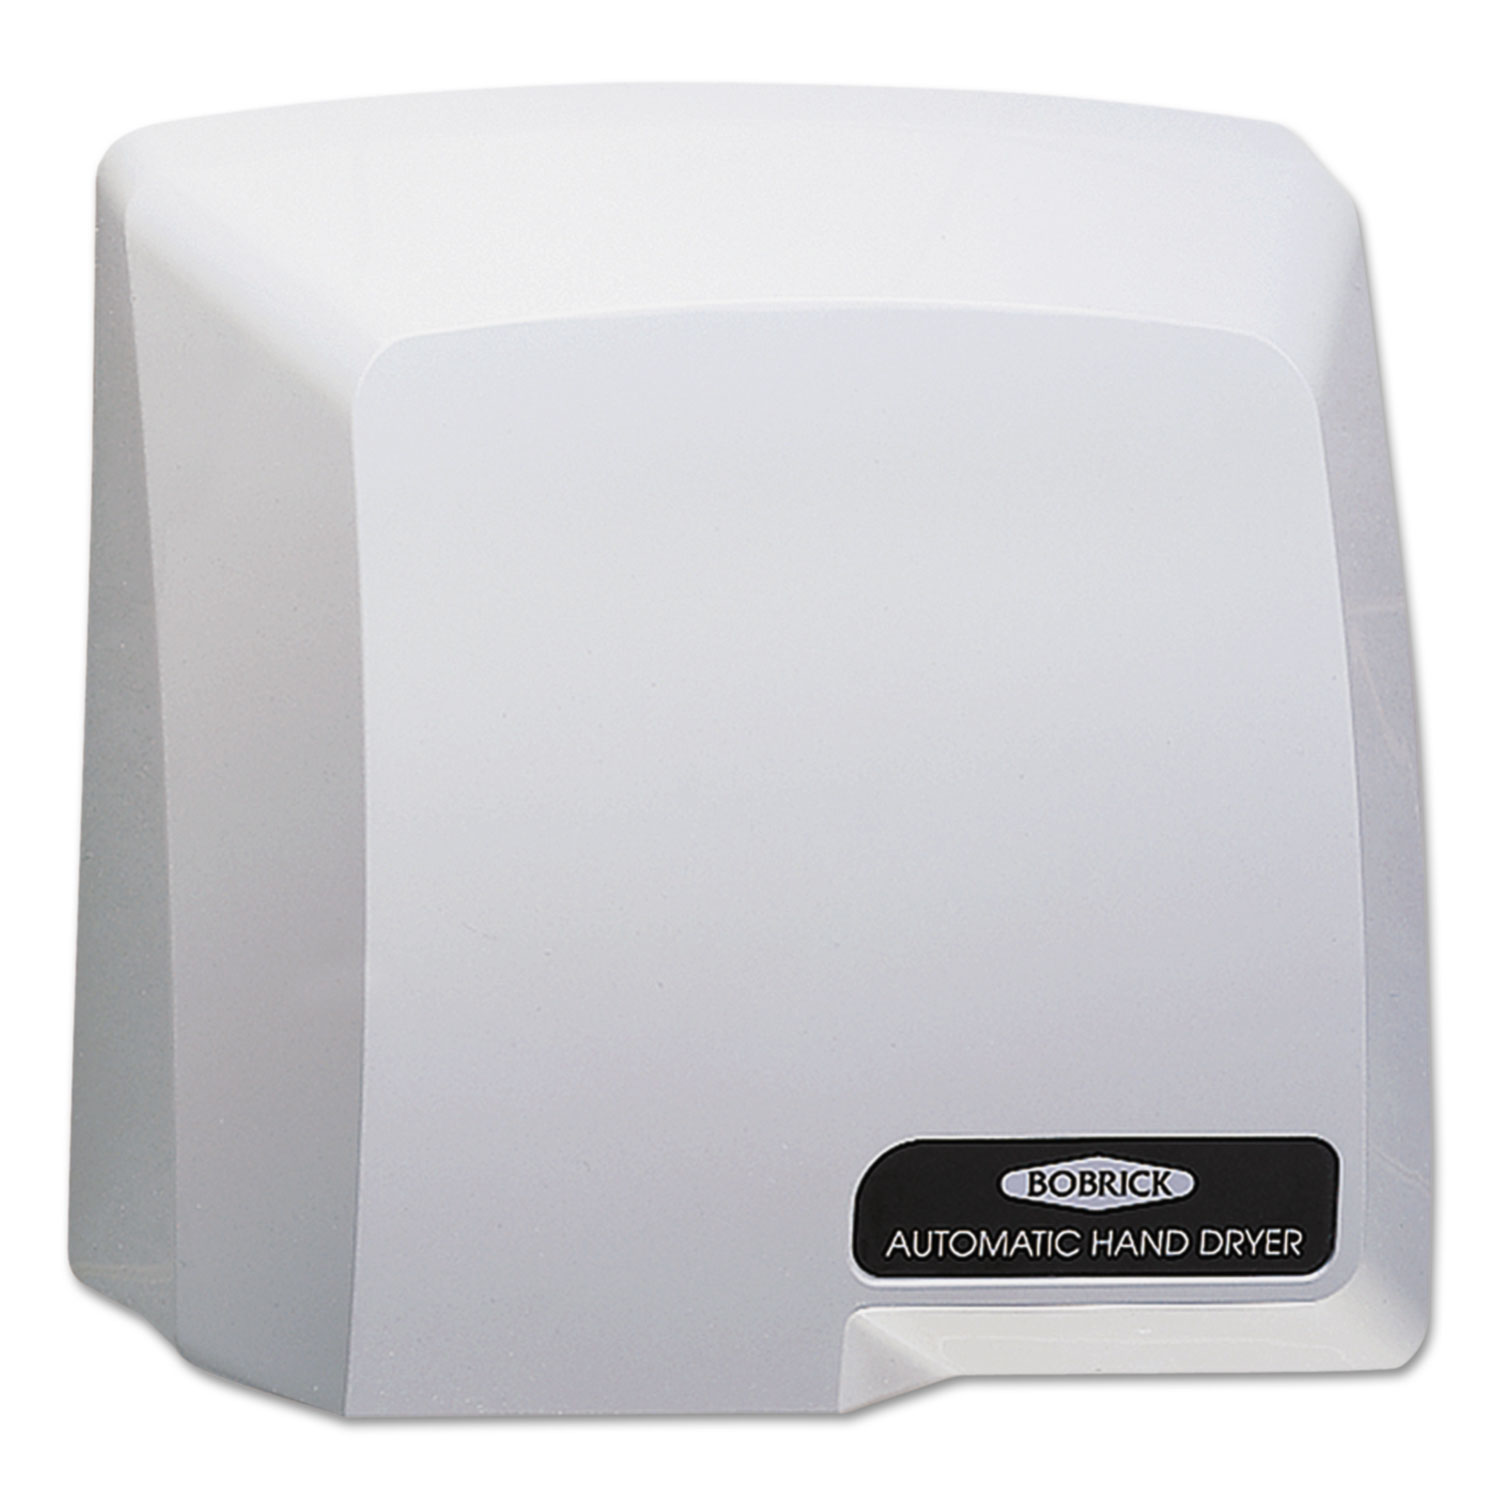  Bobrick 710 Compact Automatic Hand Dryer, 115V, Gray (BOB710) 